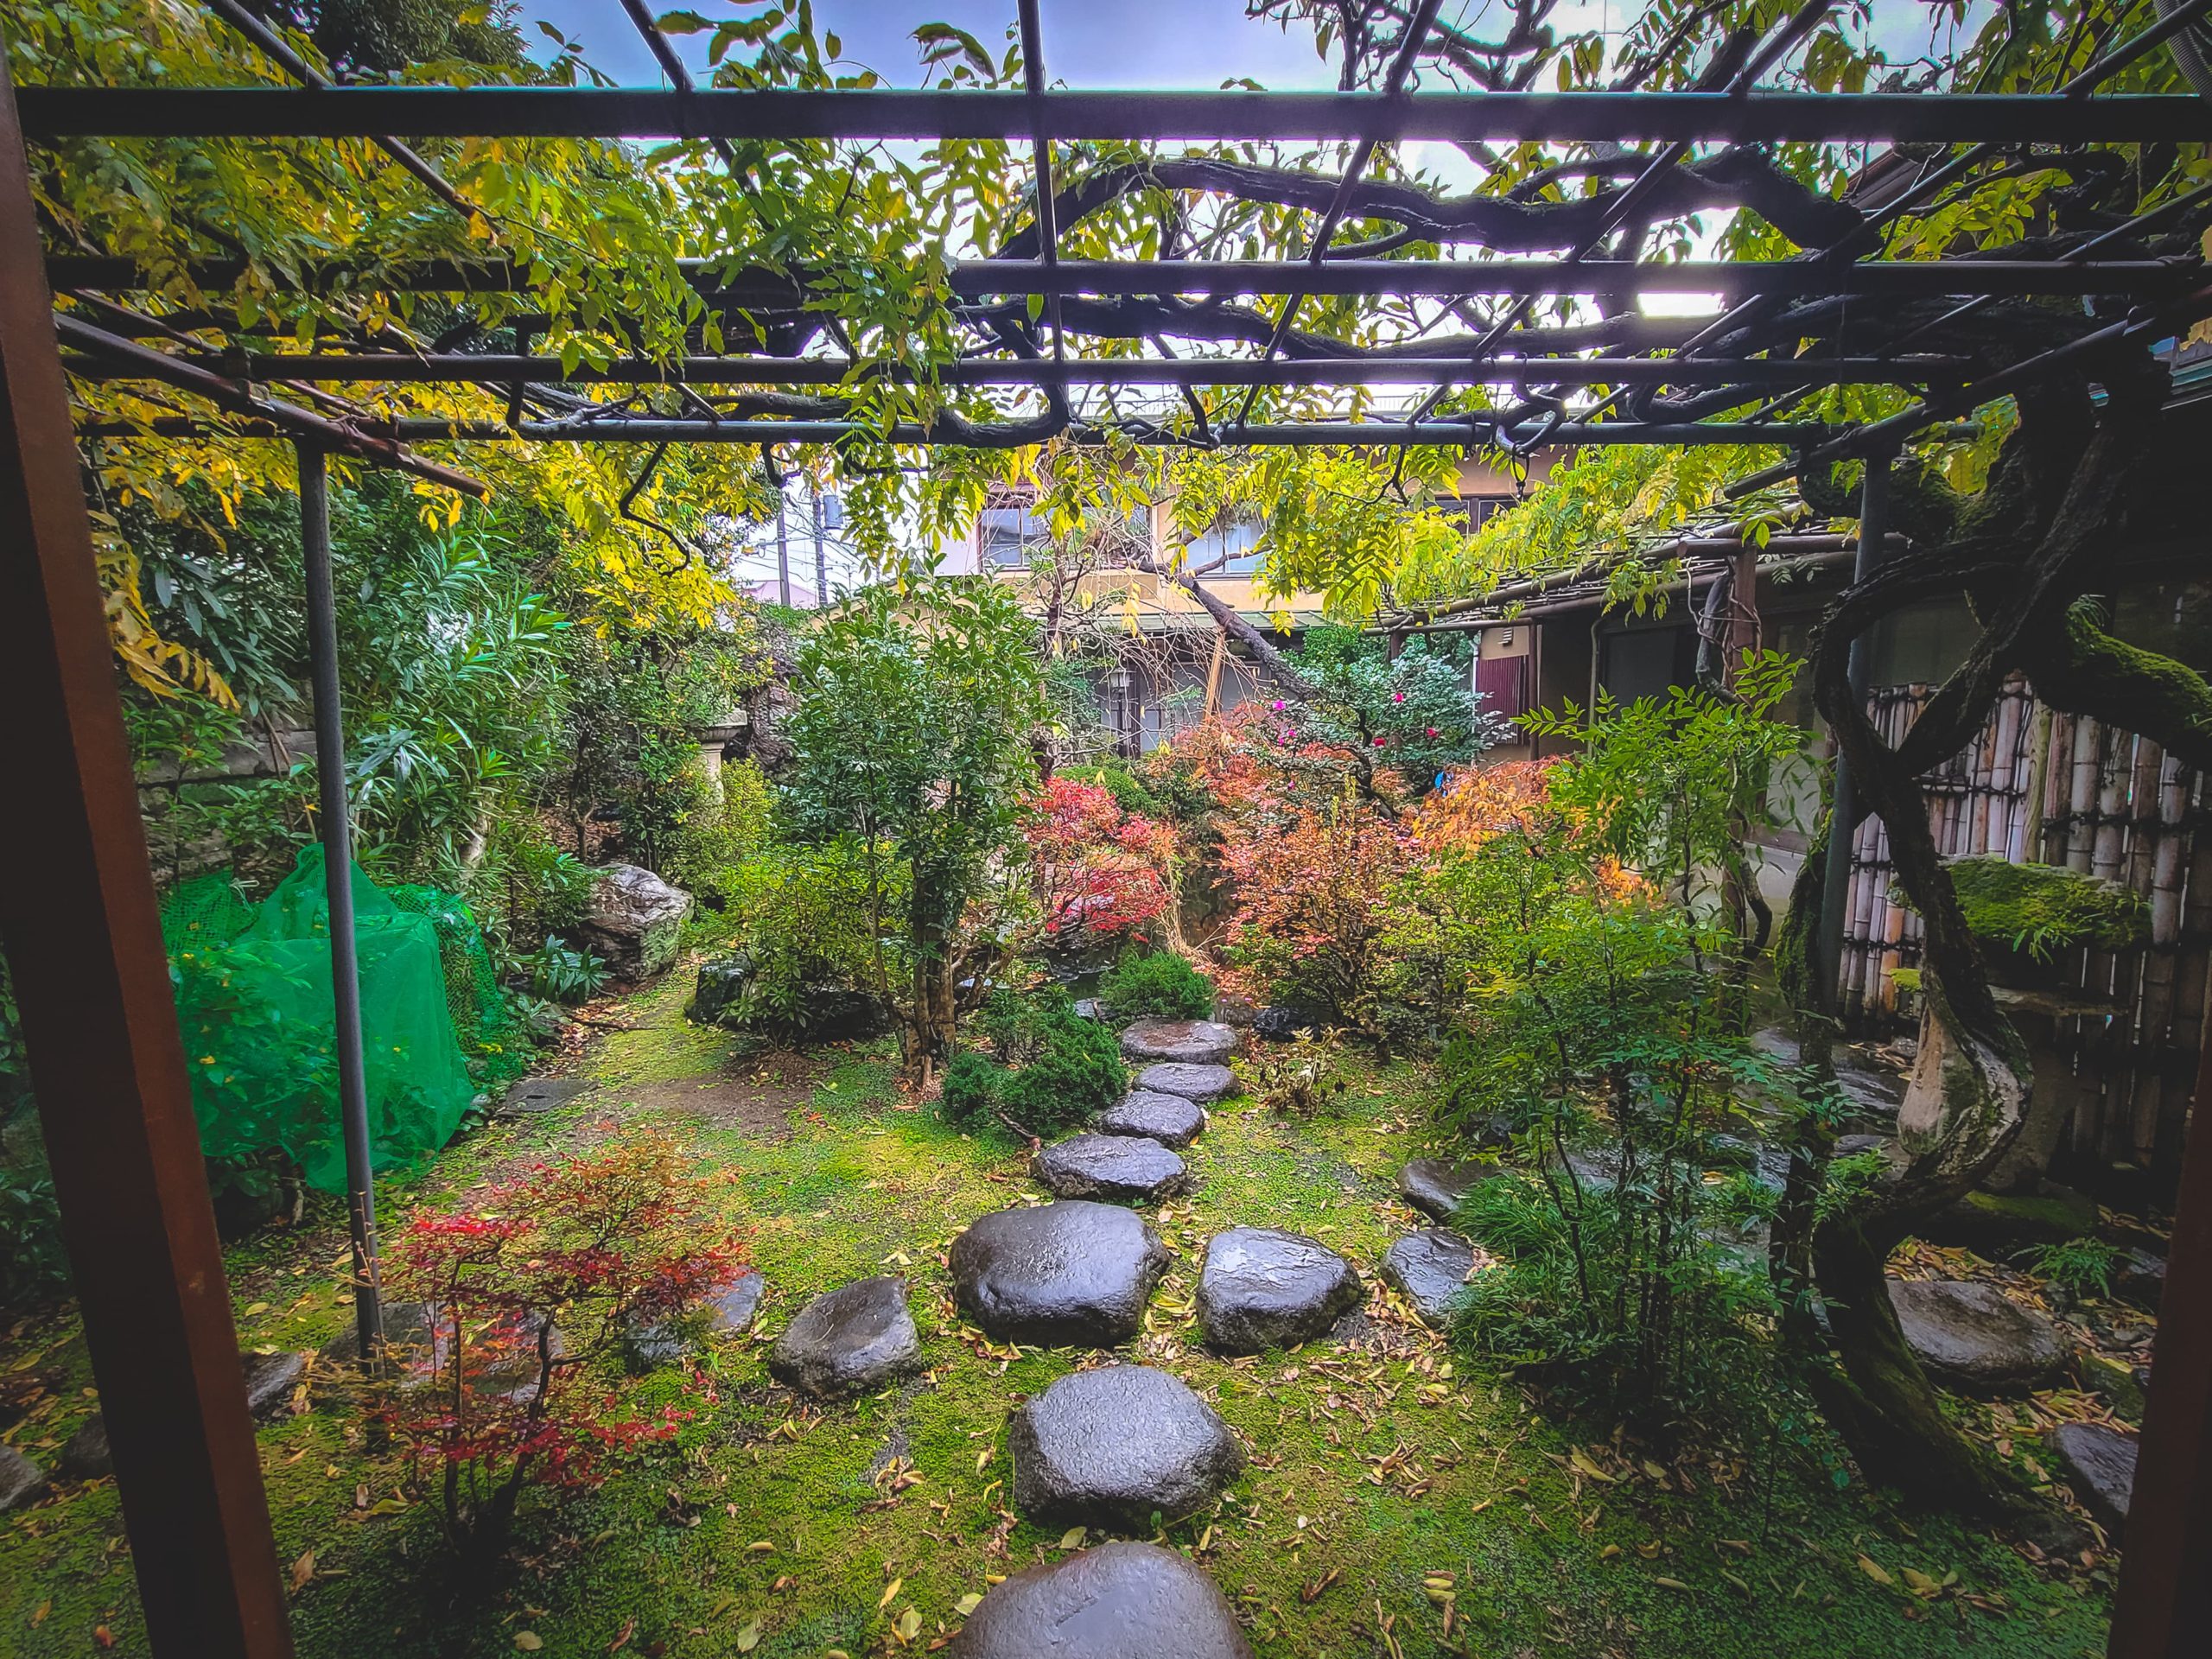 The nakaniwa garden, a sight to behold